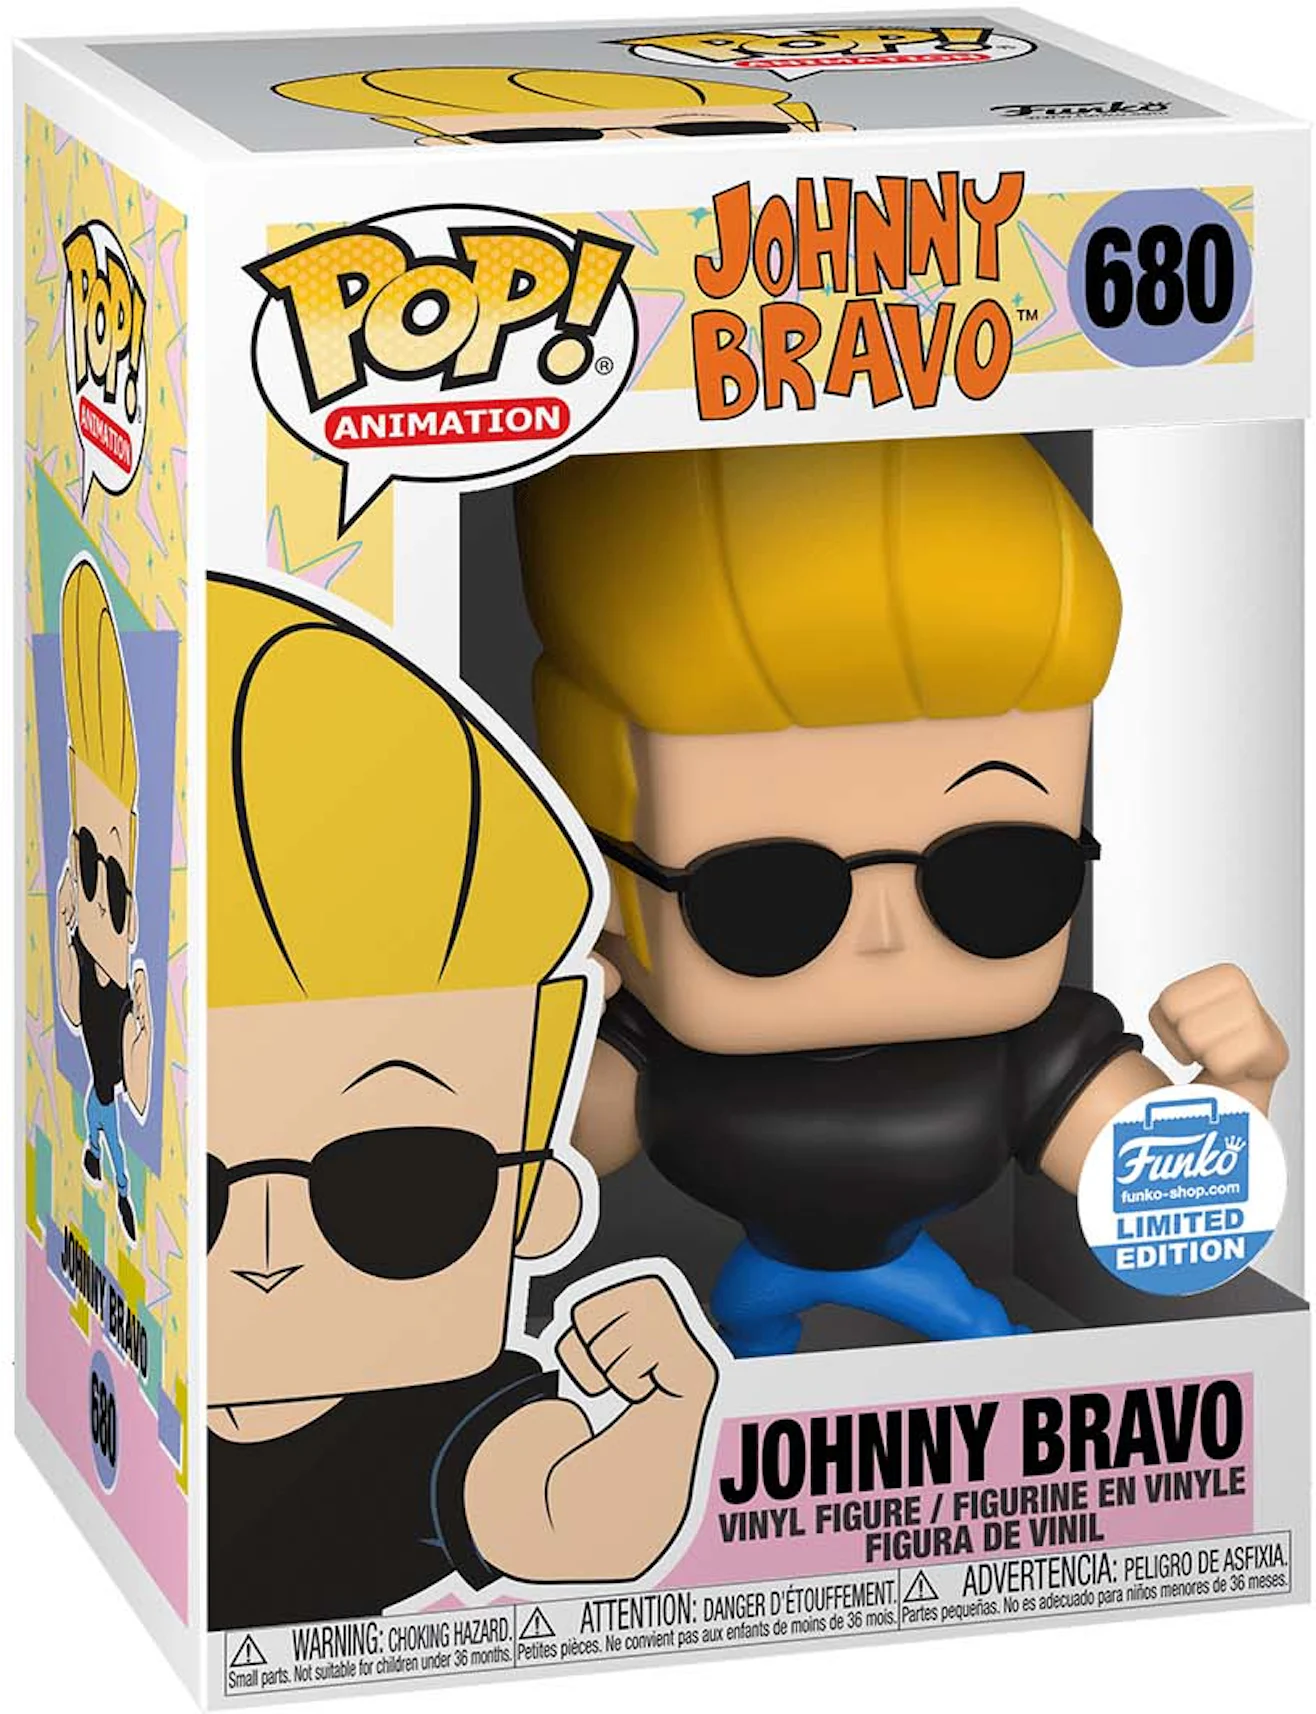 https://images.stockx.com/images/Funko-Pop-Animation-Johnny-Bravo-Funko-Shop-Exclusive-Figure-680.jpg?fit=fill&bg=FFFFFF&w=1200&h=857&fm=webp&auto=compress&dpr=2&trim=color&updated_at=1618428415&q=60